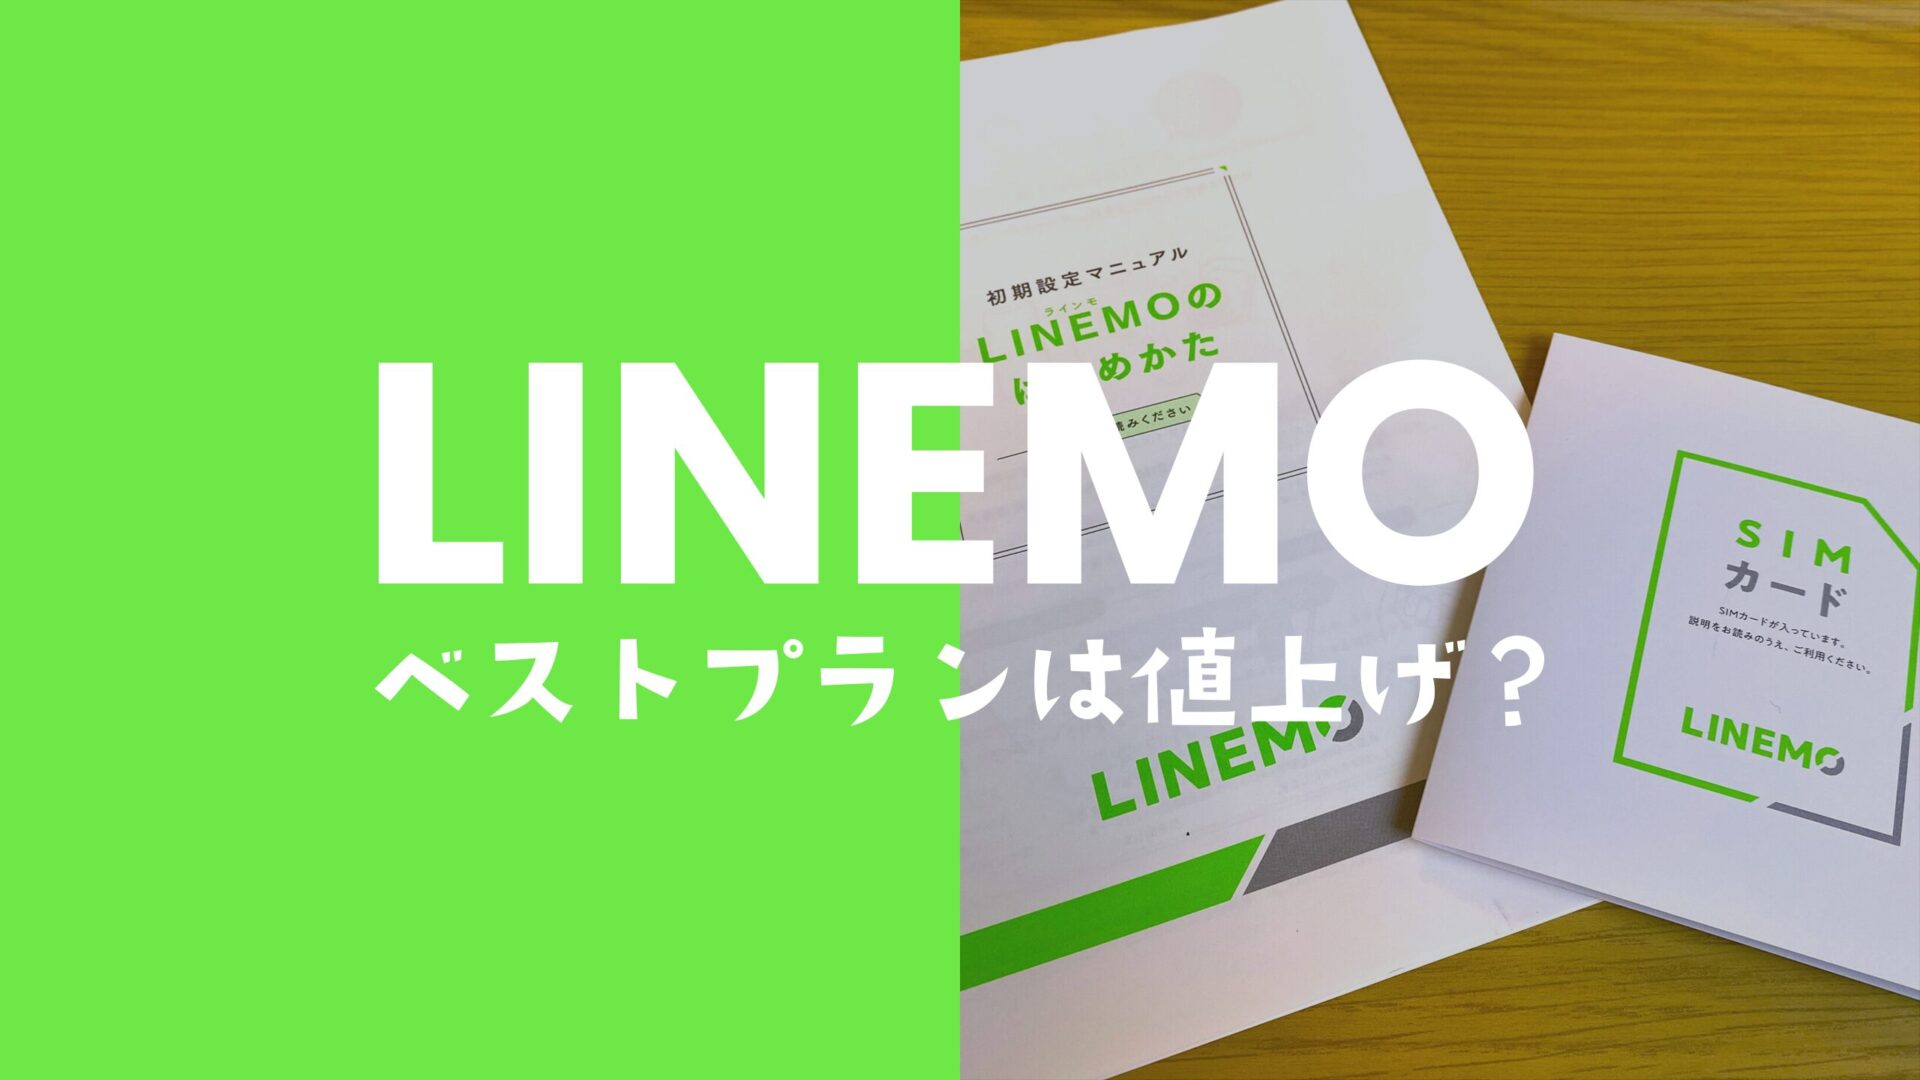 LINEMO(ラインモ)が値上げ？ベストプラン開始は実質的値上げなのか解説。のサムネイル画像